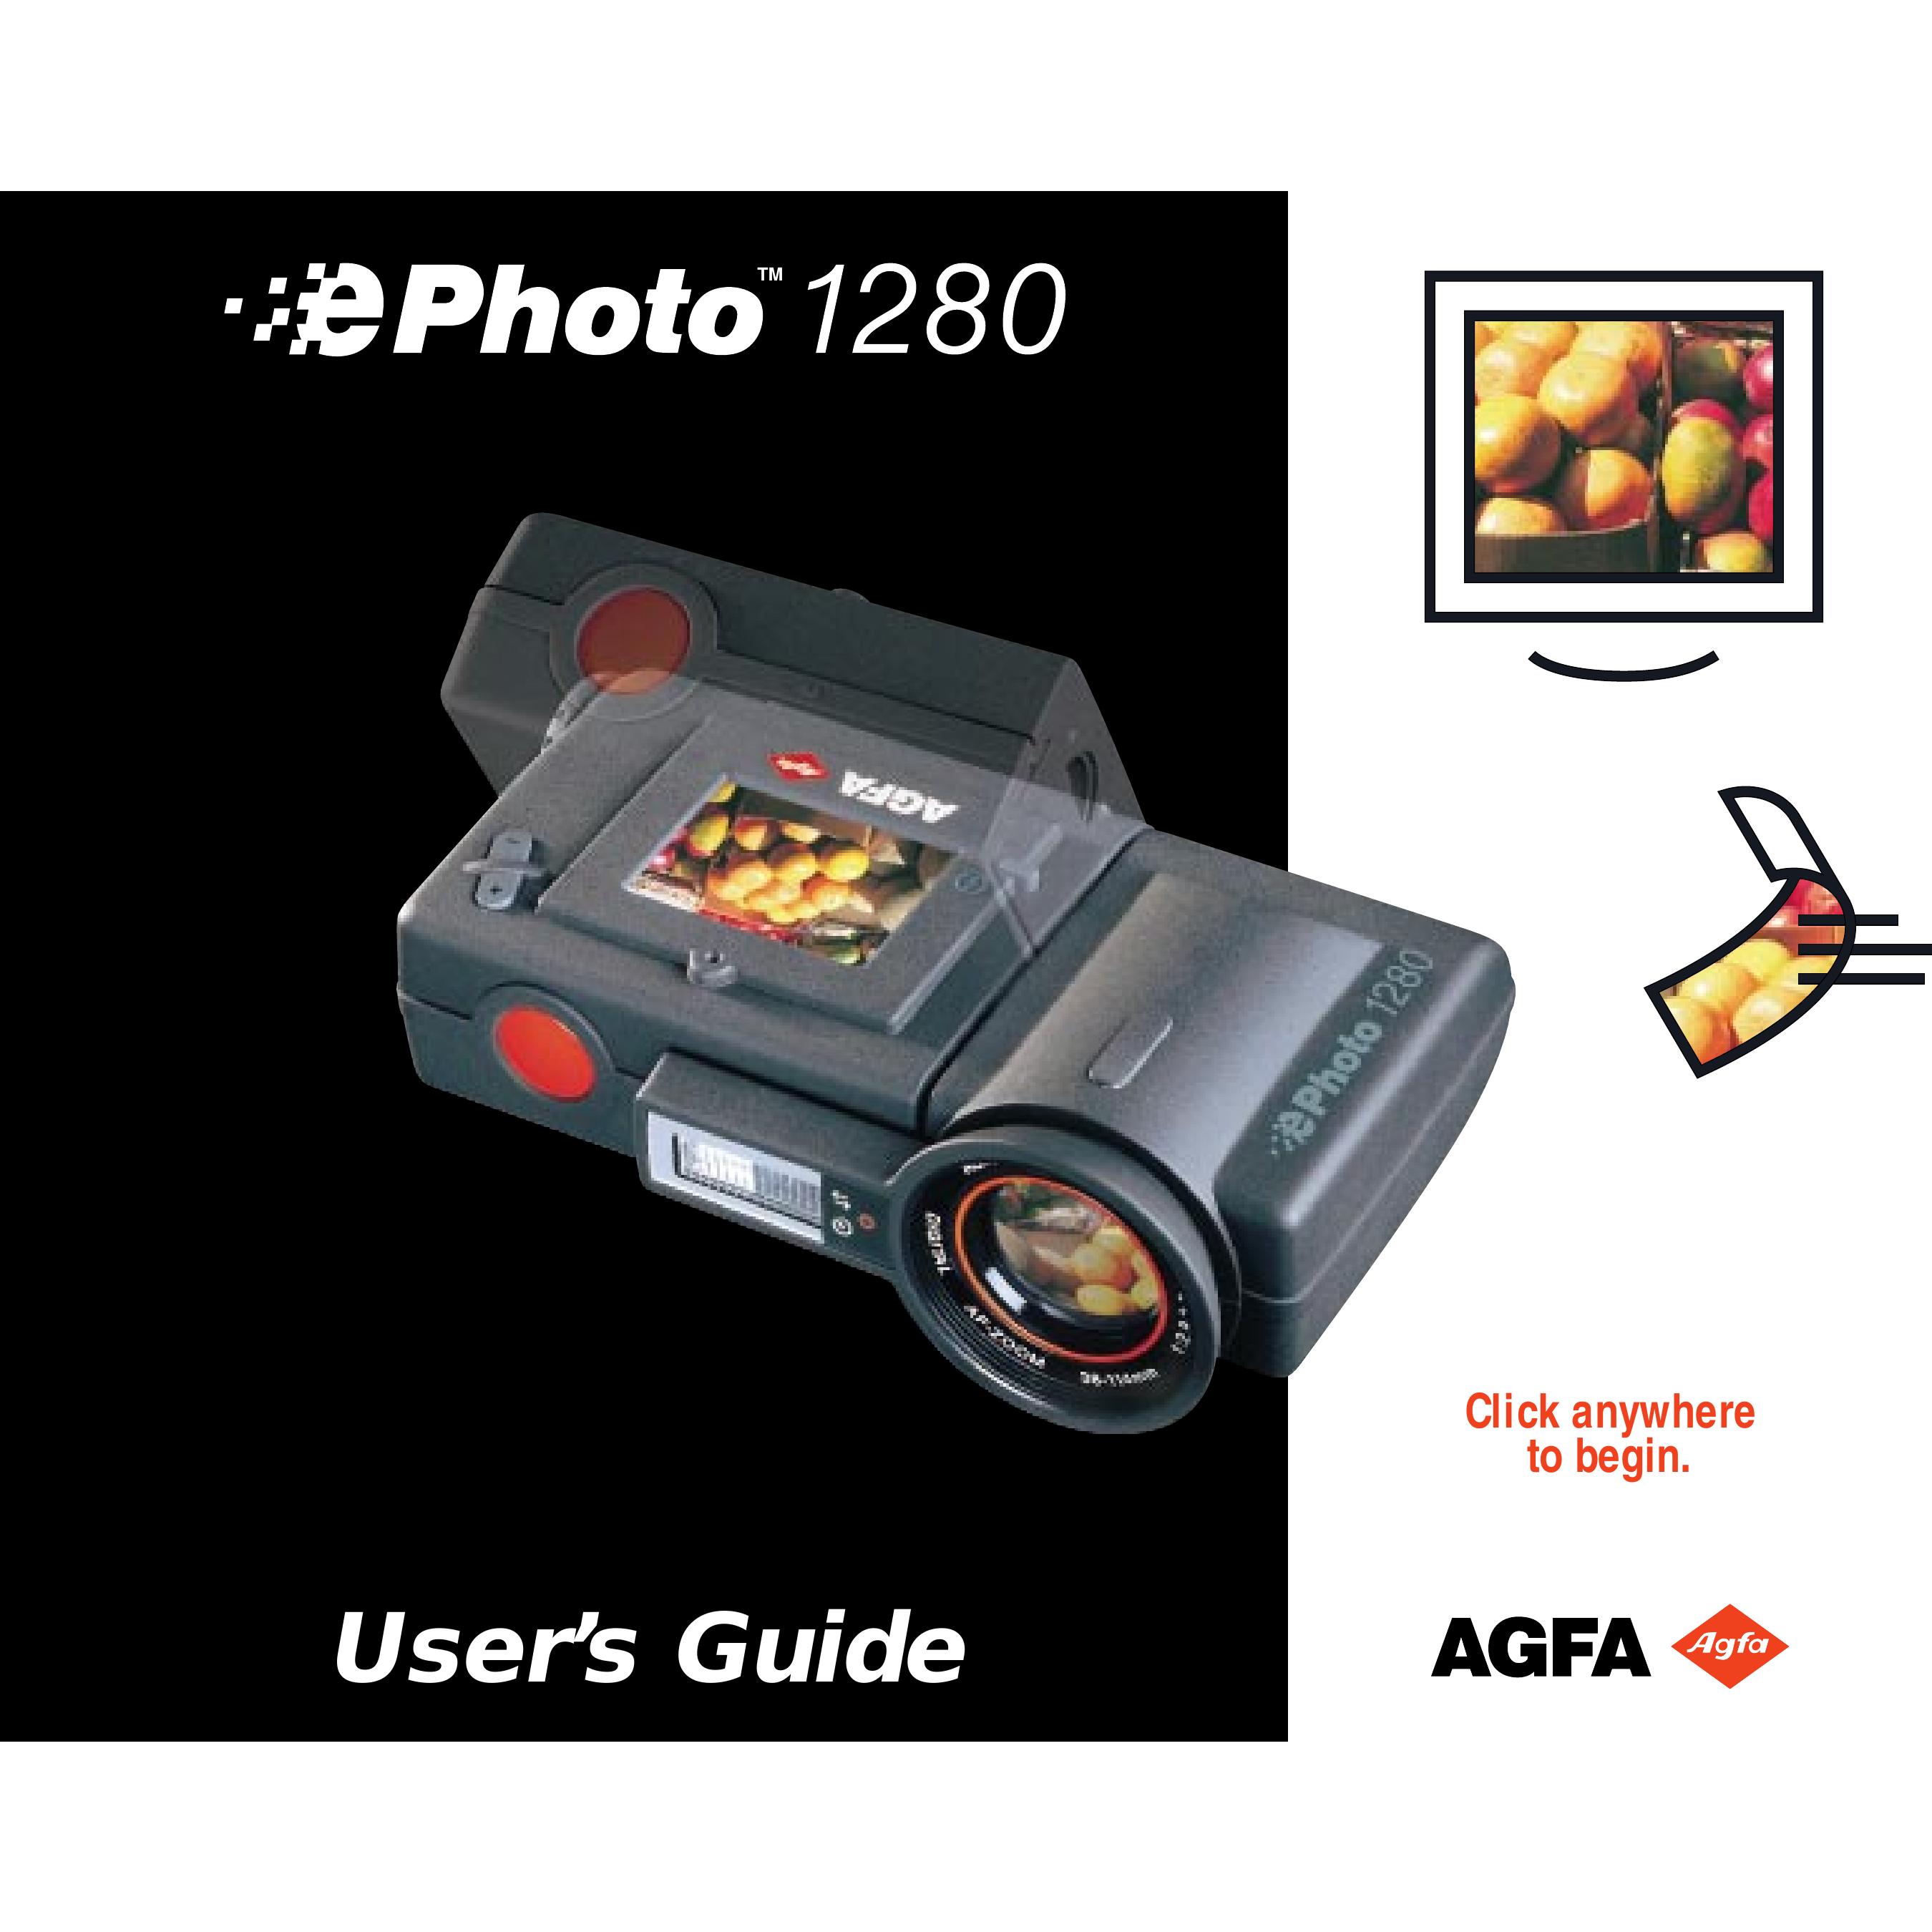 AGFA ePHOTO 1280 Digital Camera User Manual